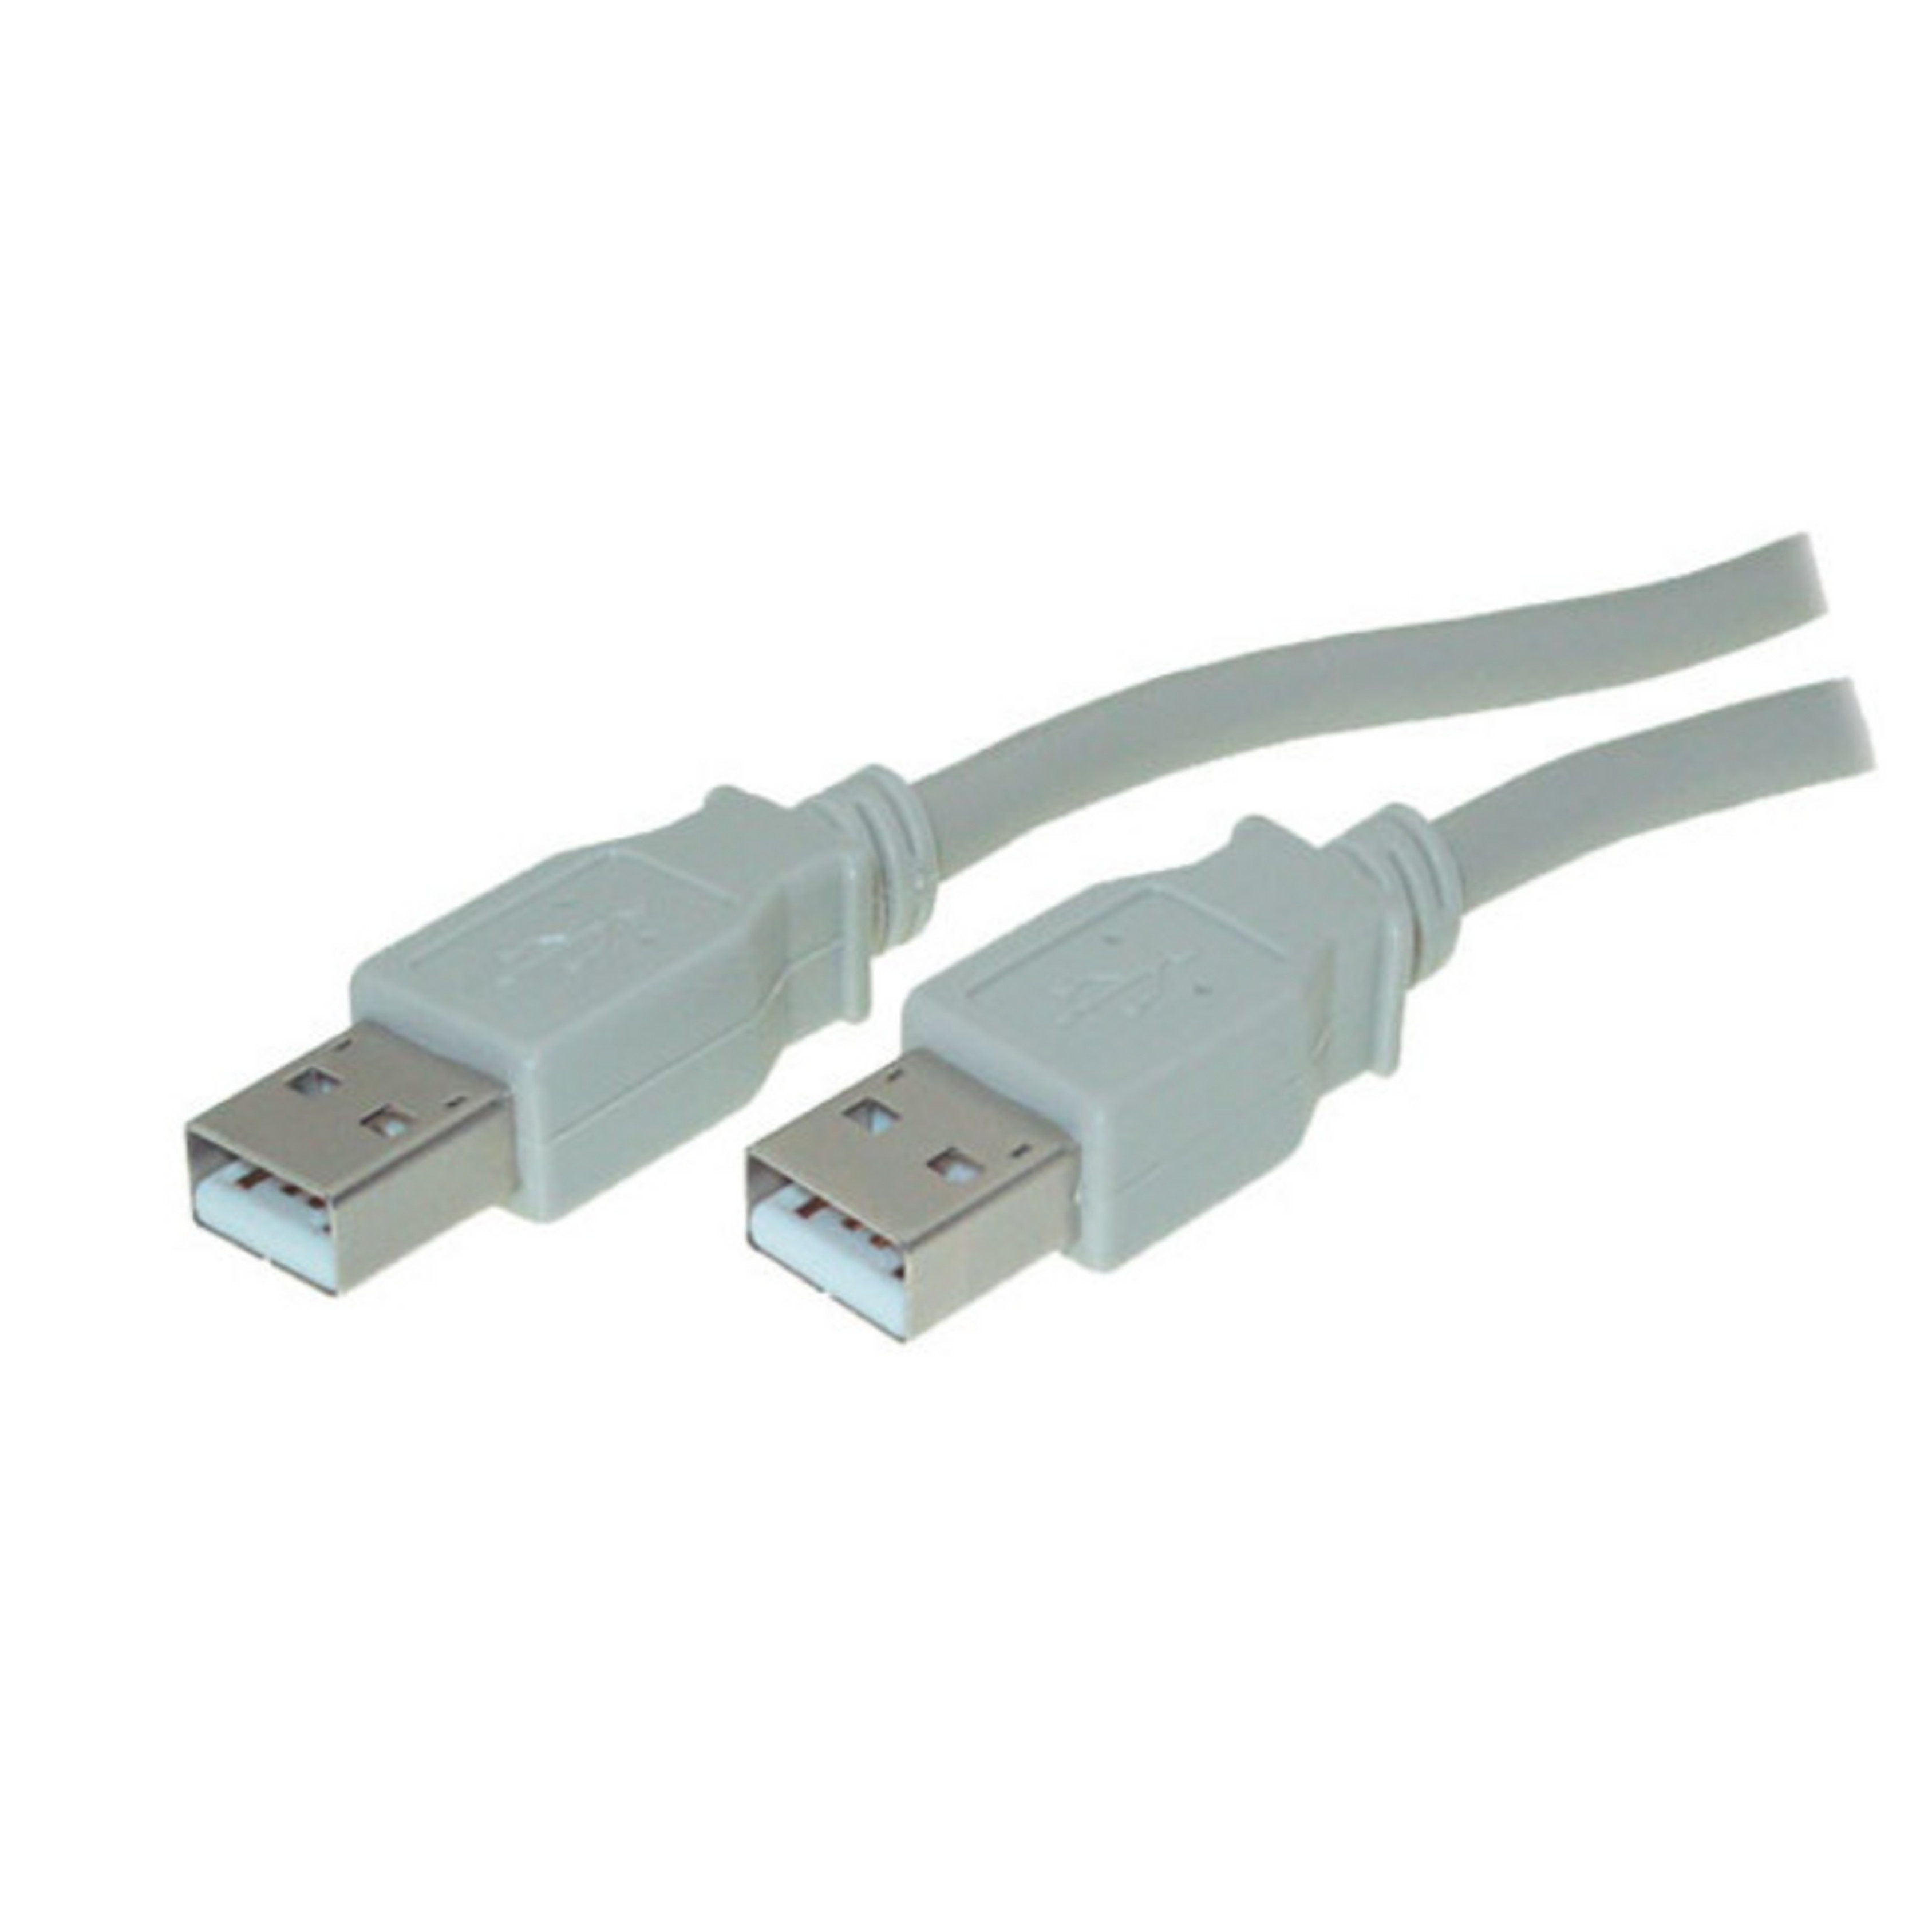 S/CONN MAXIMUM 2.0 / USB Stecker A USB 0,5m A CONNECTIVITY Stecker USB Kabel Kabel